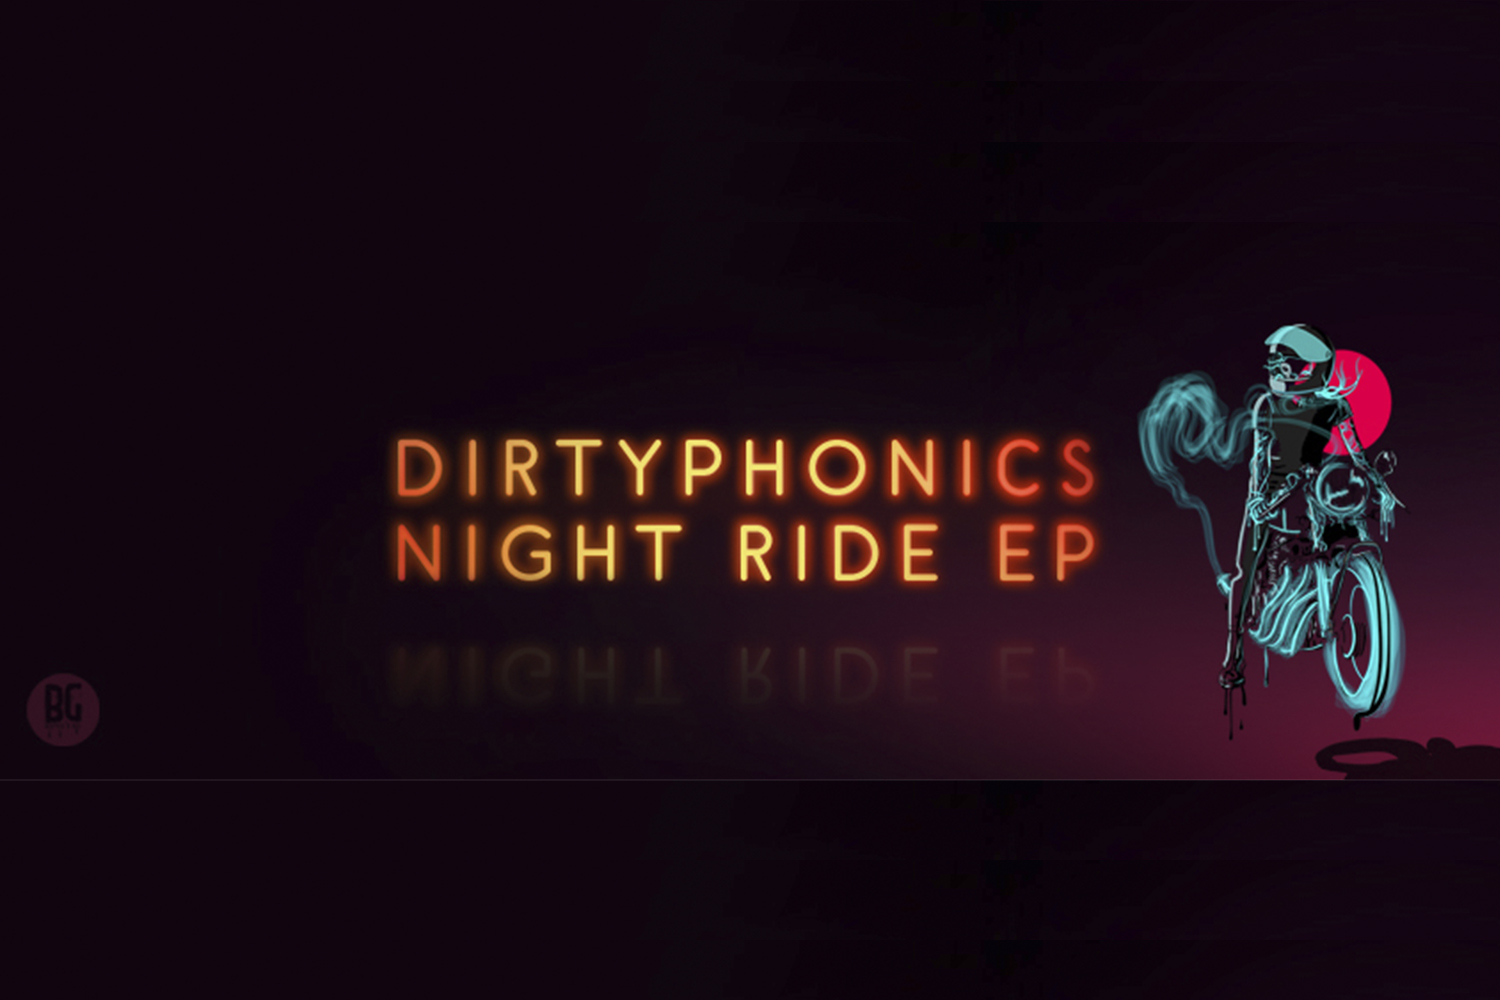 dirtyphonics night ride ep in bright orange lettering